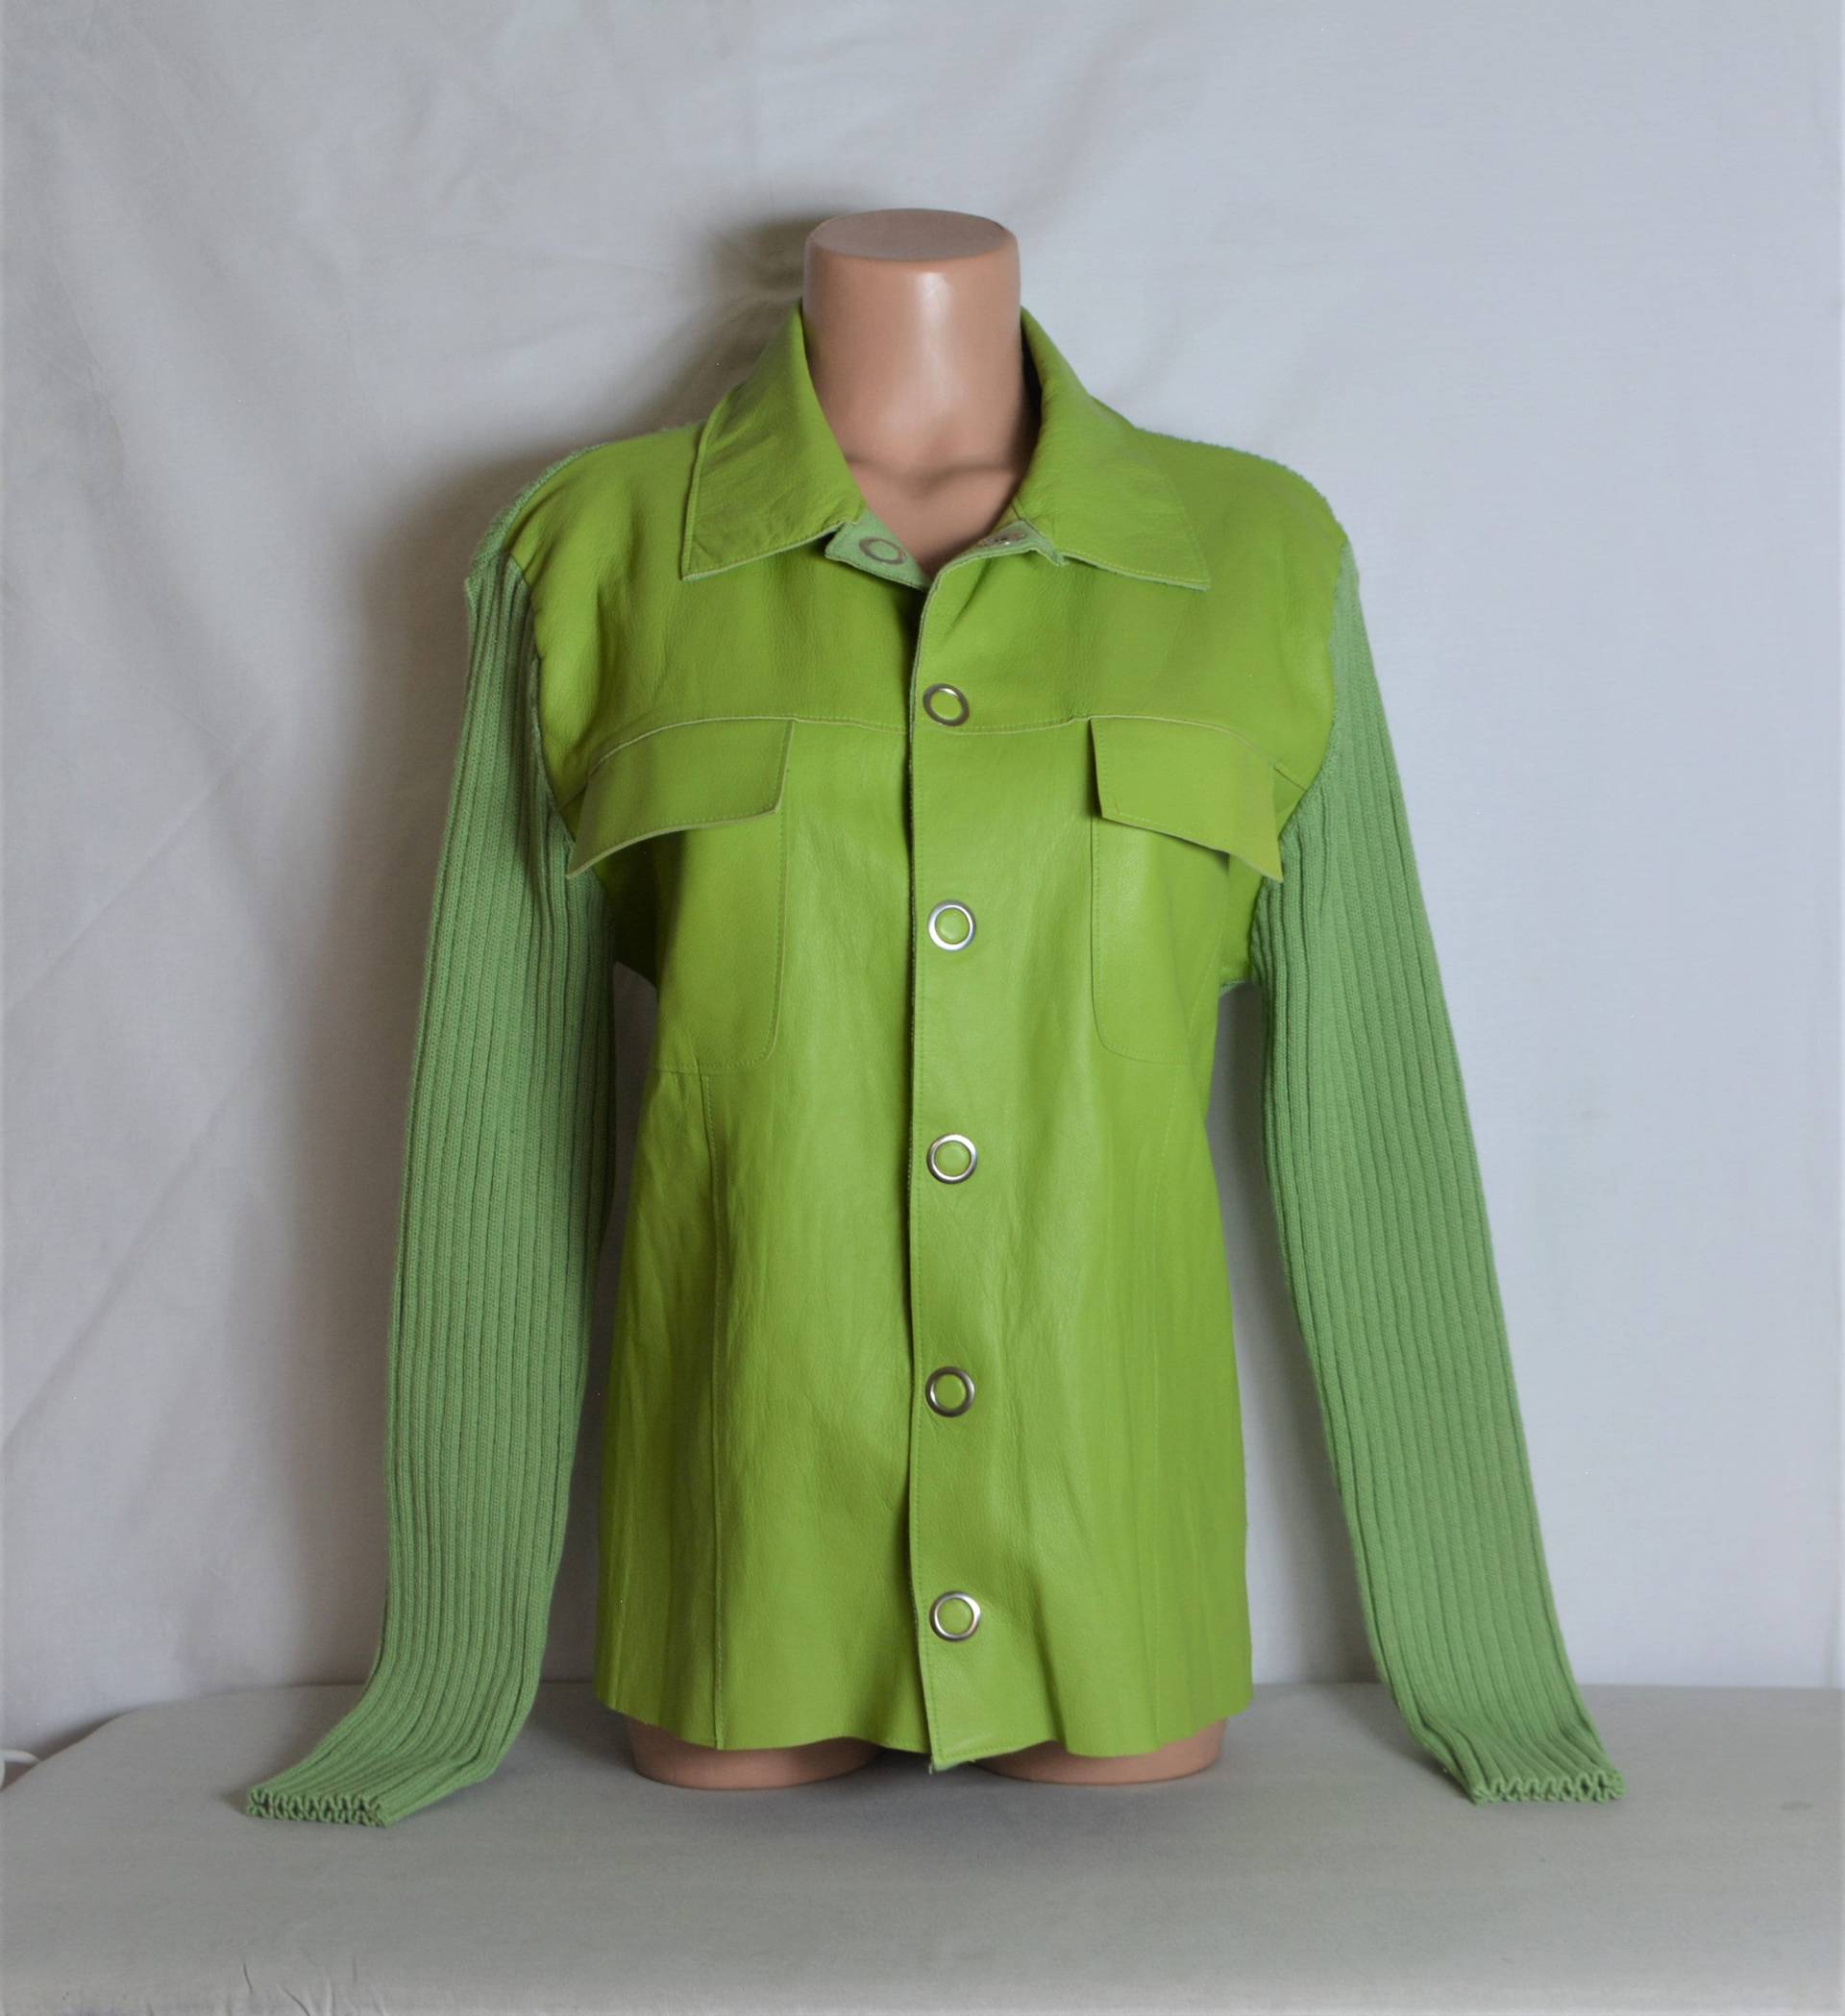 Vintage Damen Grüne Lederjacke Gr. S/M Gerippt Gestrickte Langarm Druckknöpfe Jacke Echtleder Made in Italy Y2K Style 2000Er von Goldeas